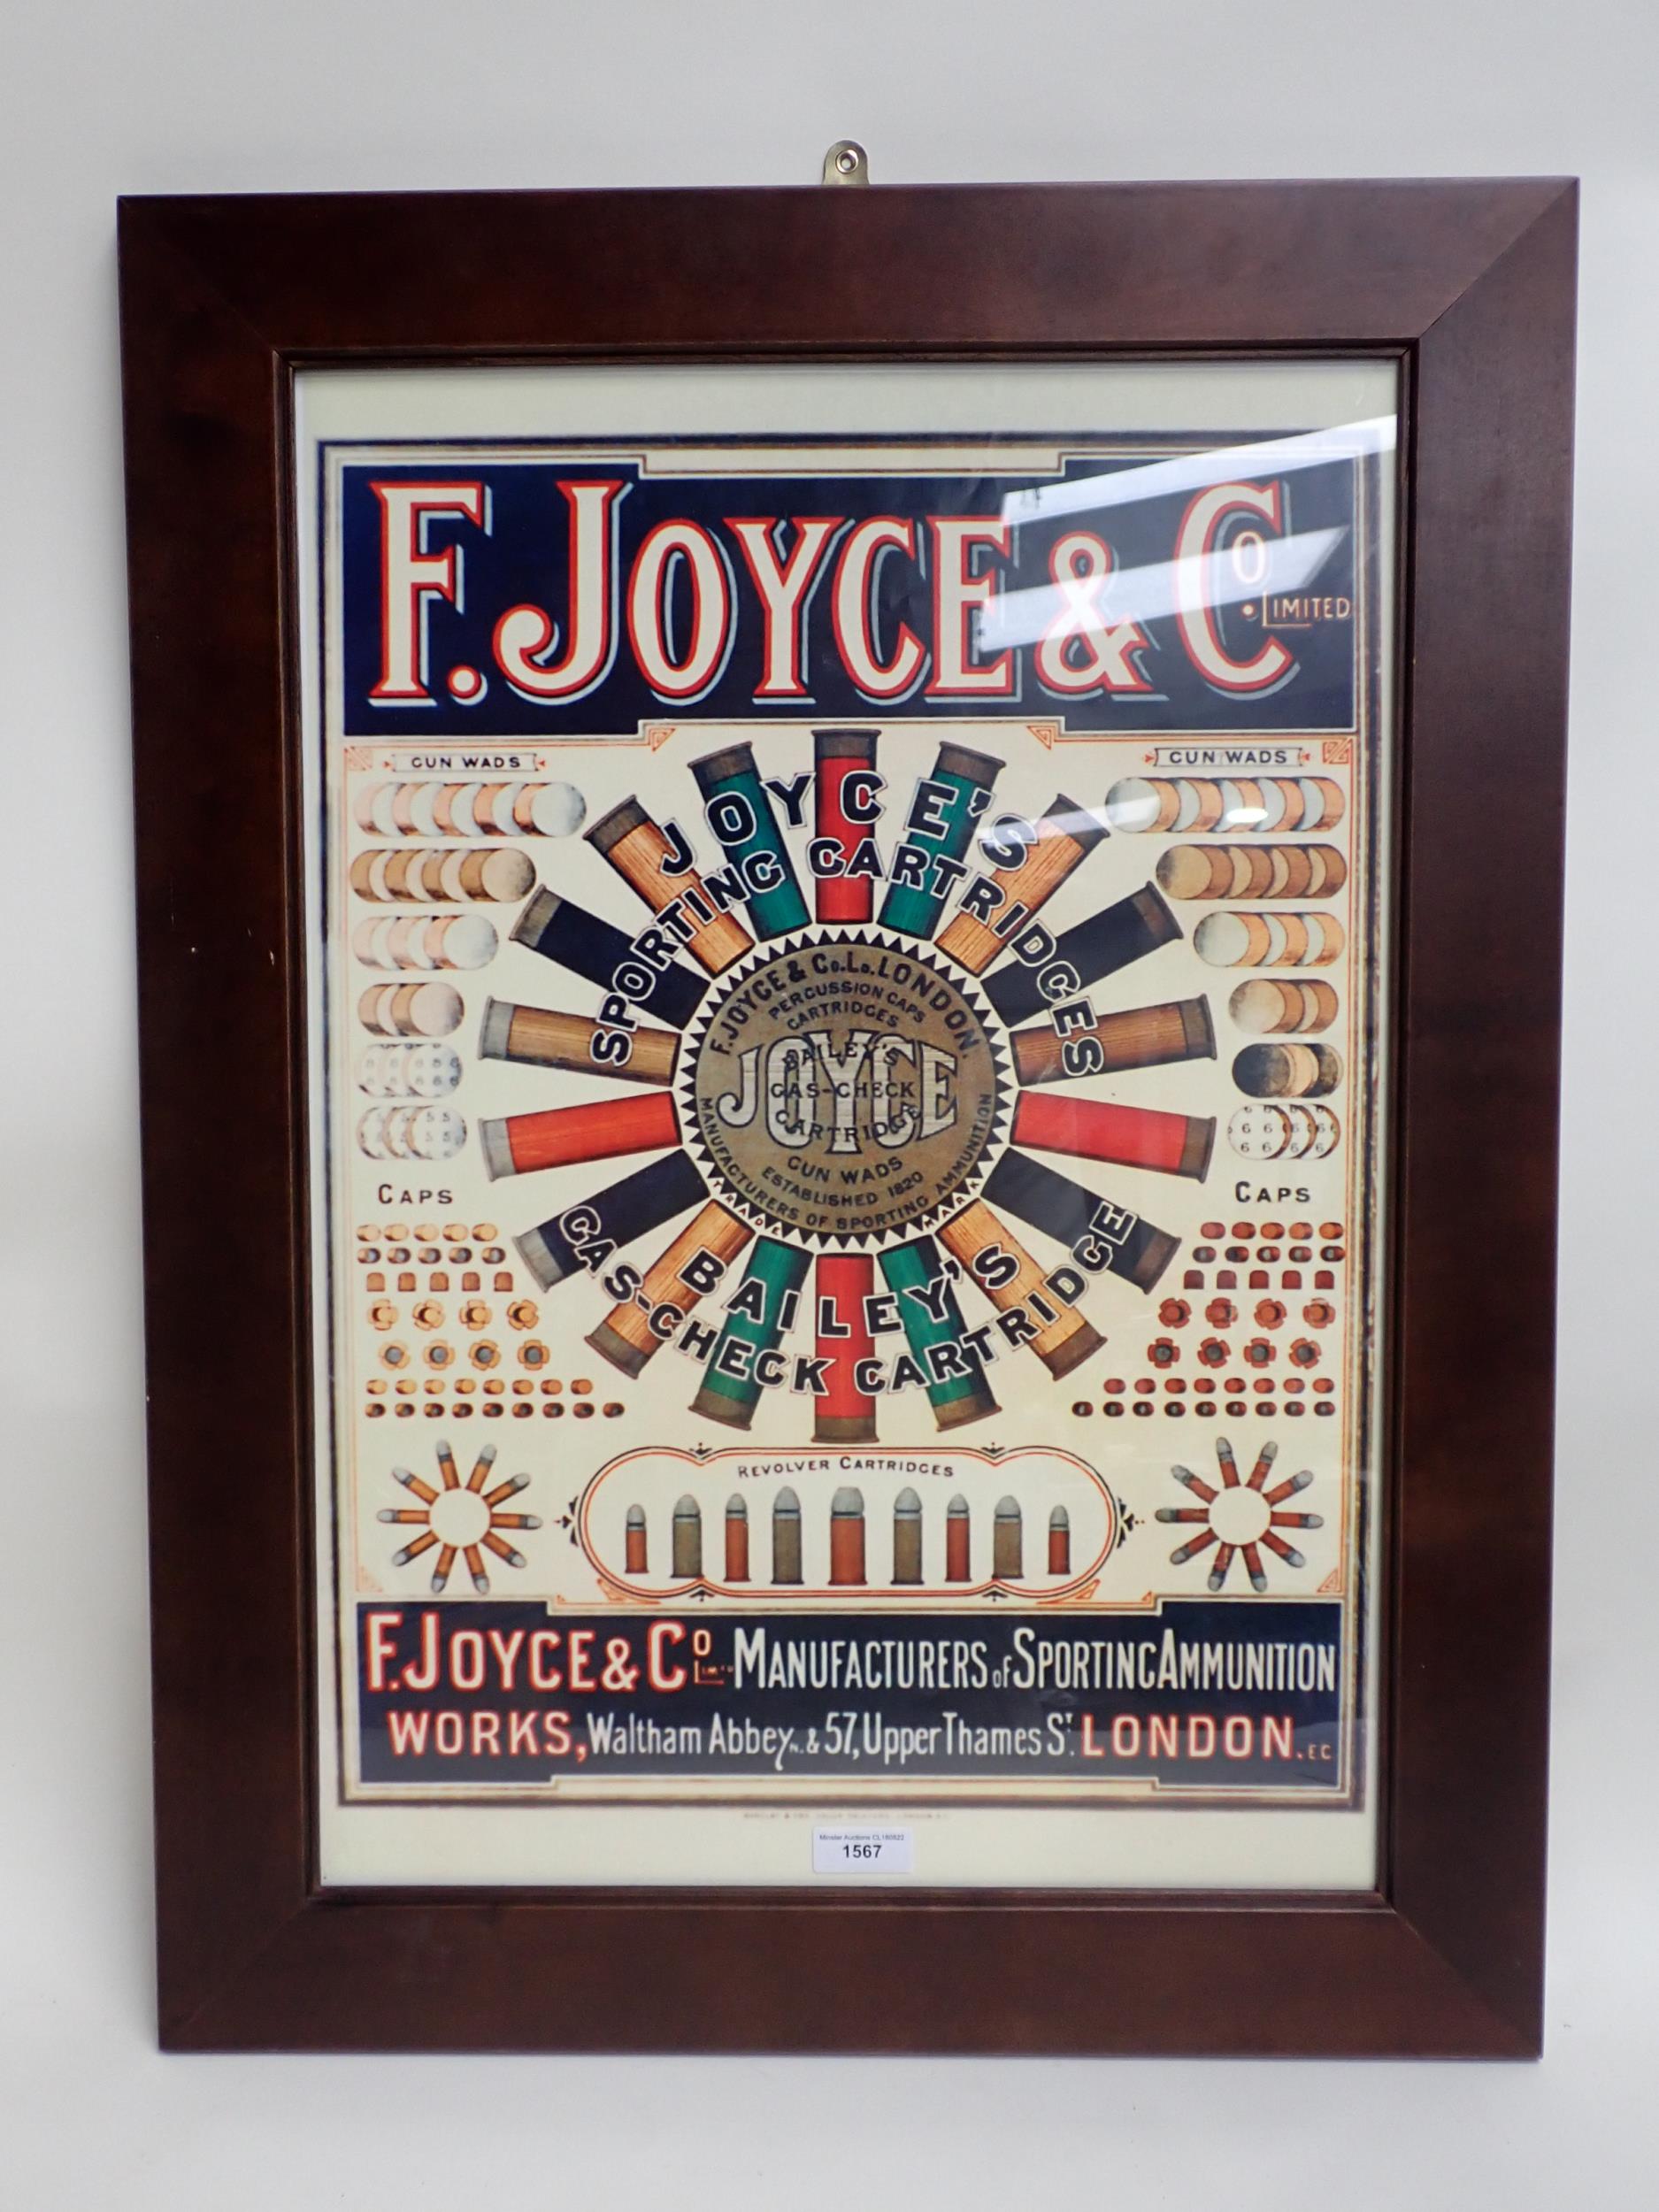 A framed Print of F. Joyce & Co. Ammunition